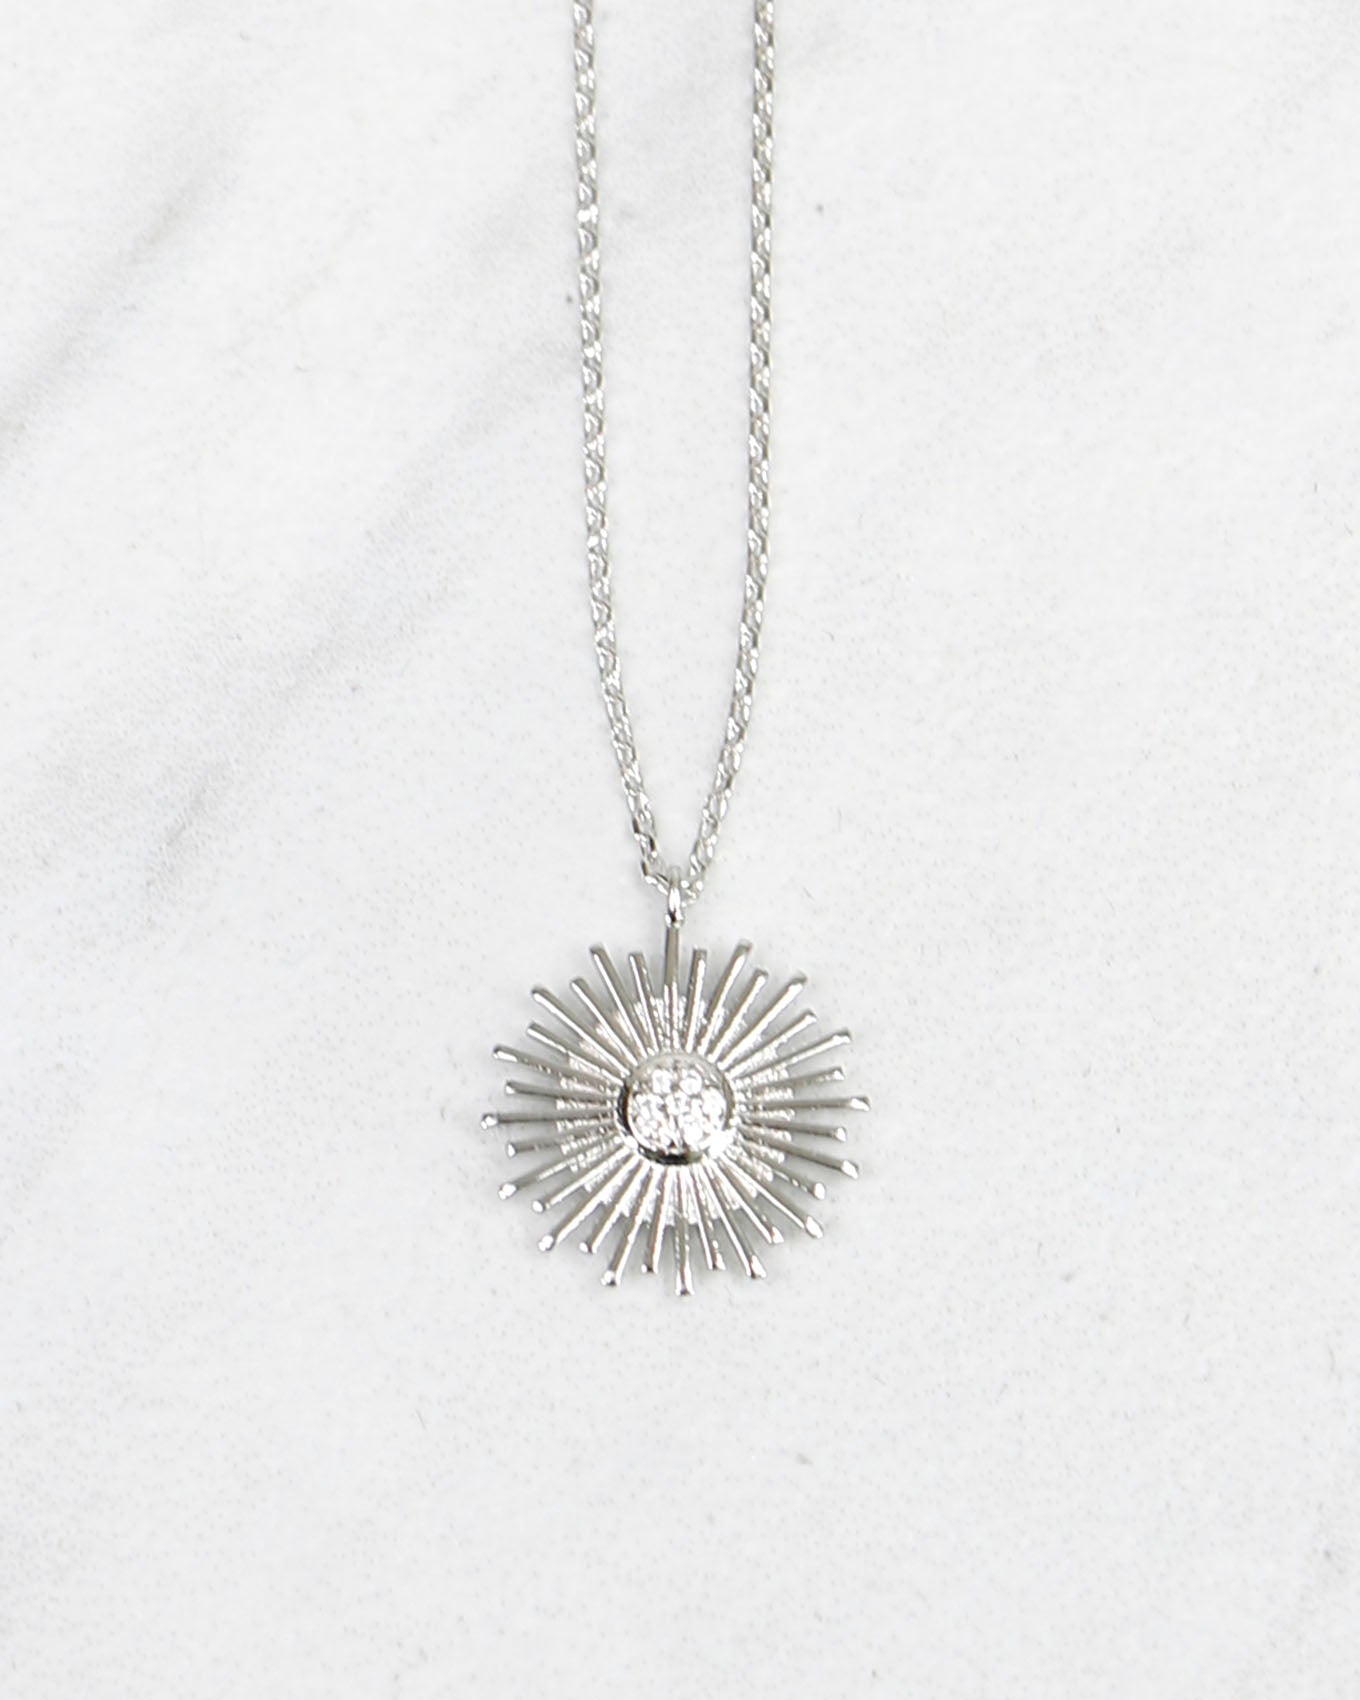 Close up of Silver Sunburst Necklace